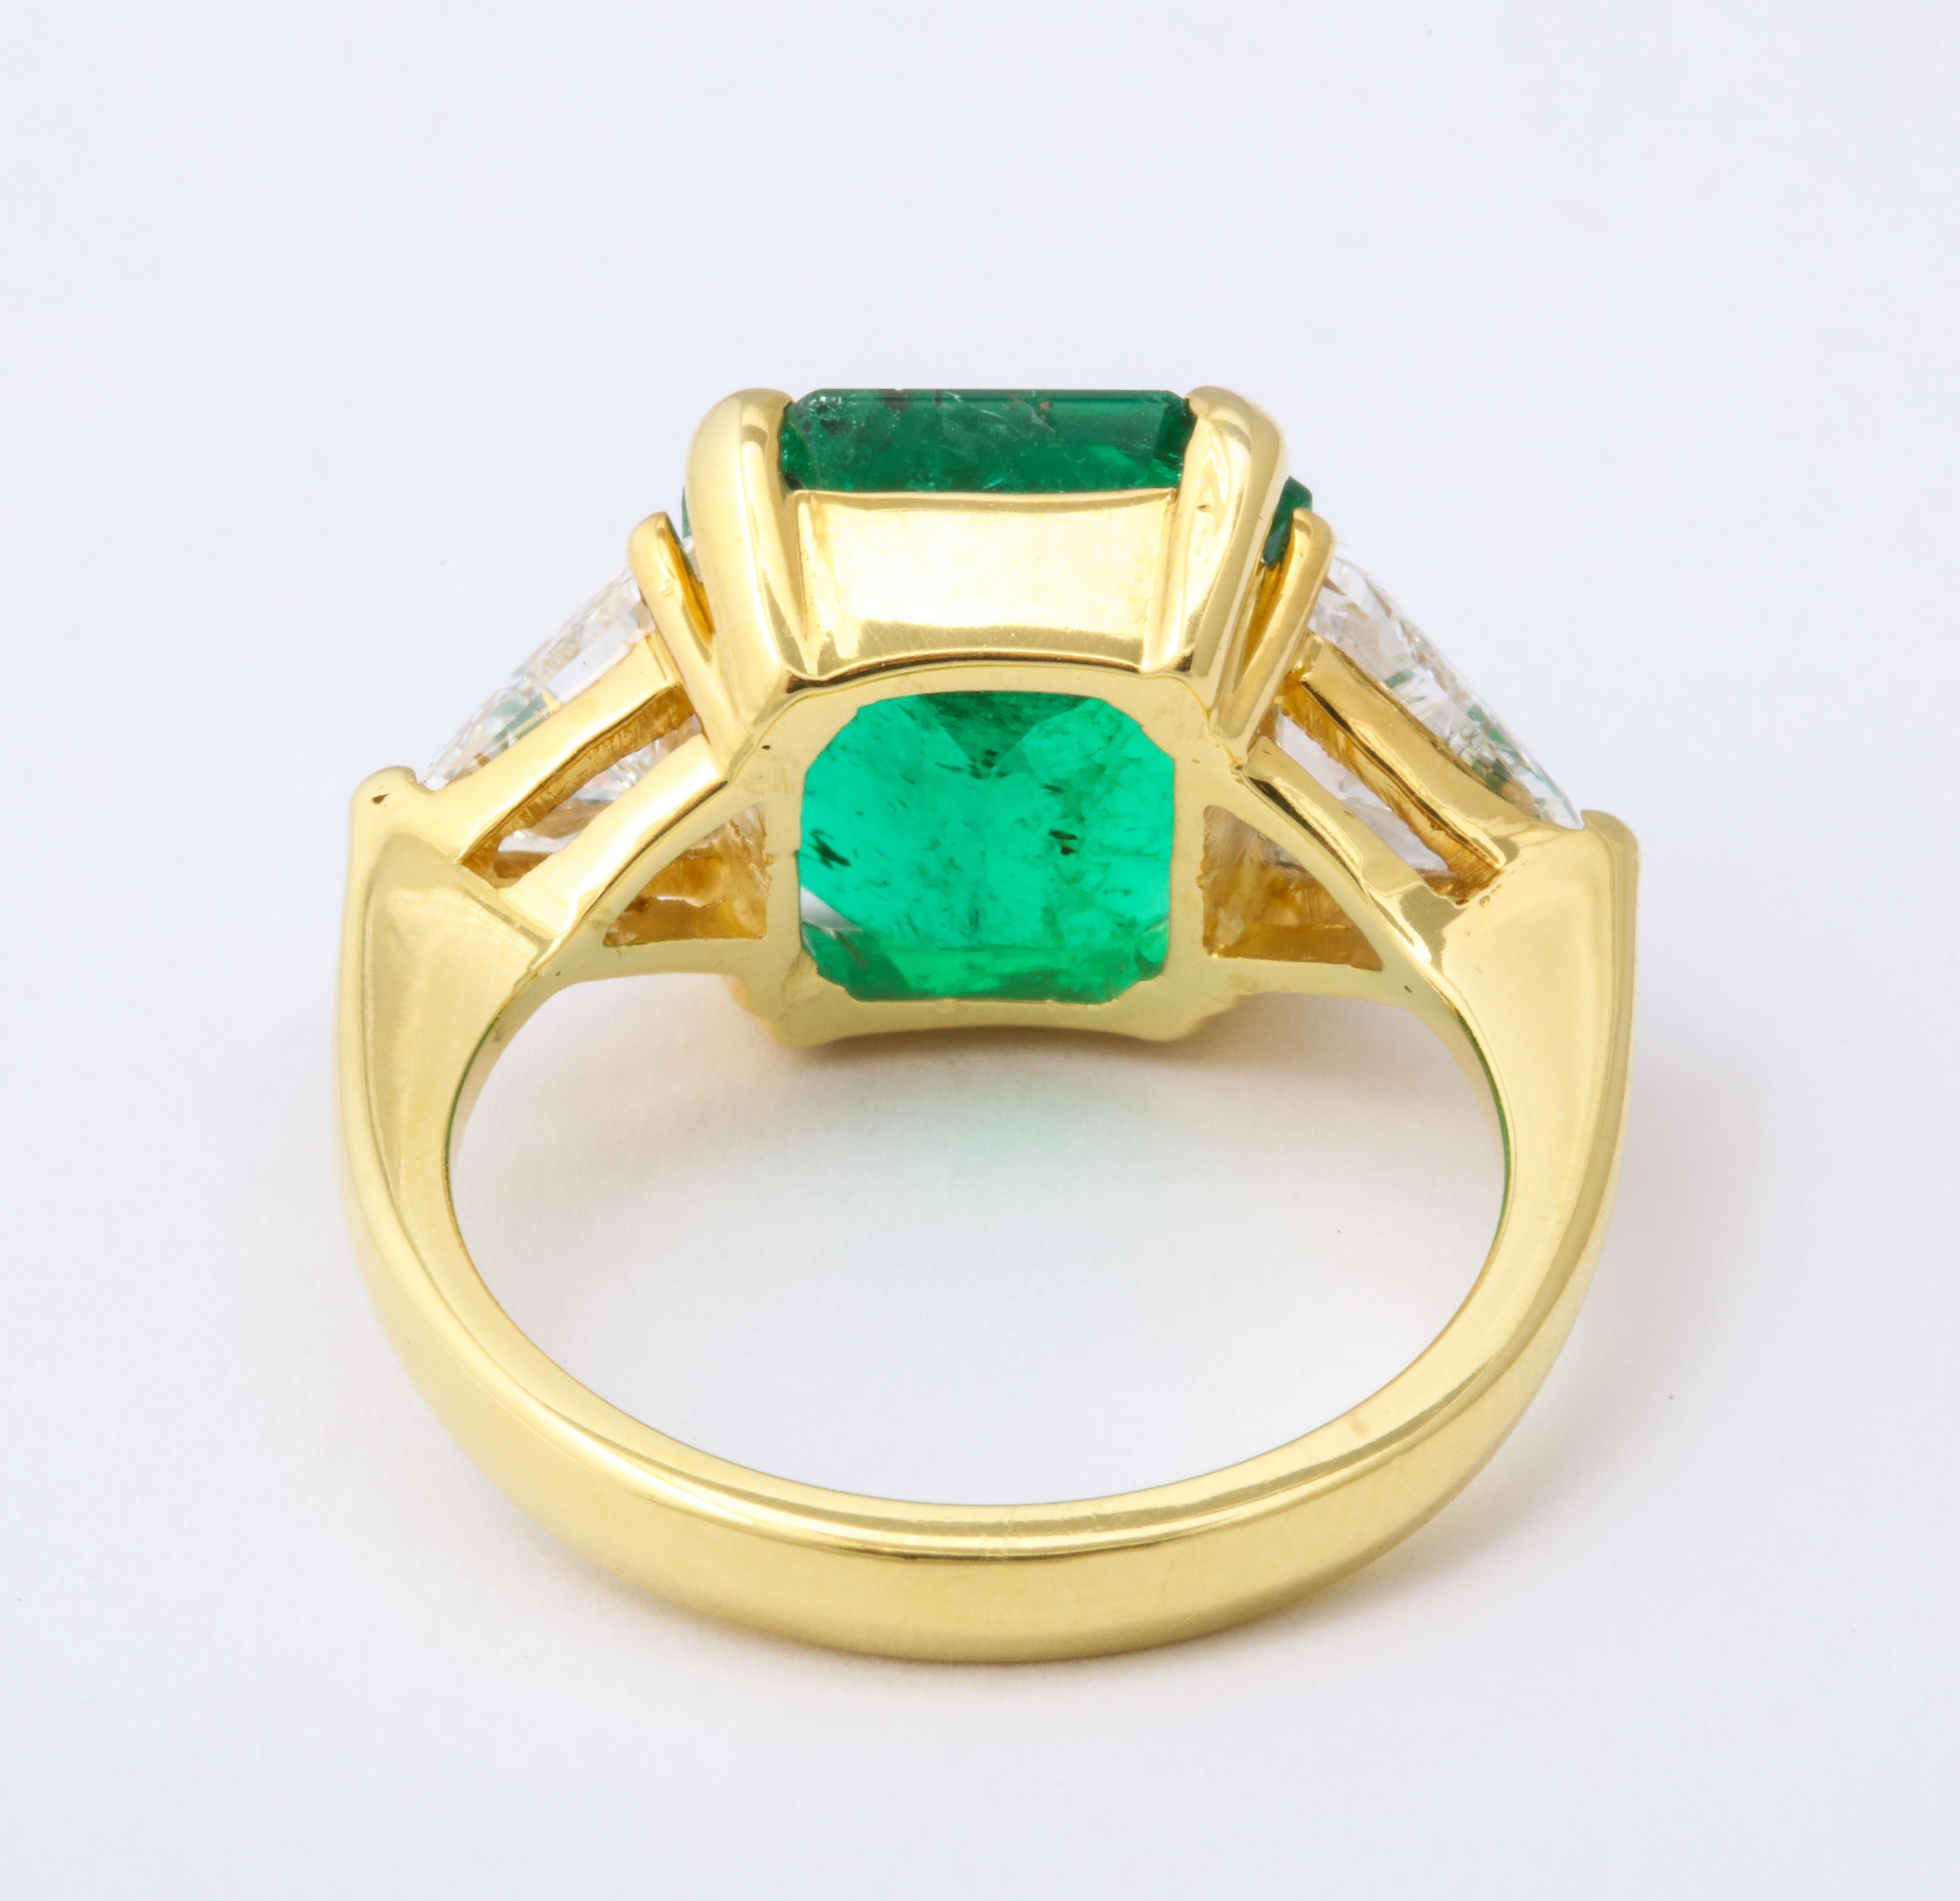 5 carat emerald diamond ring